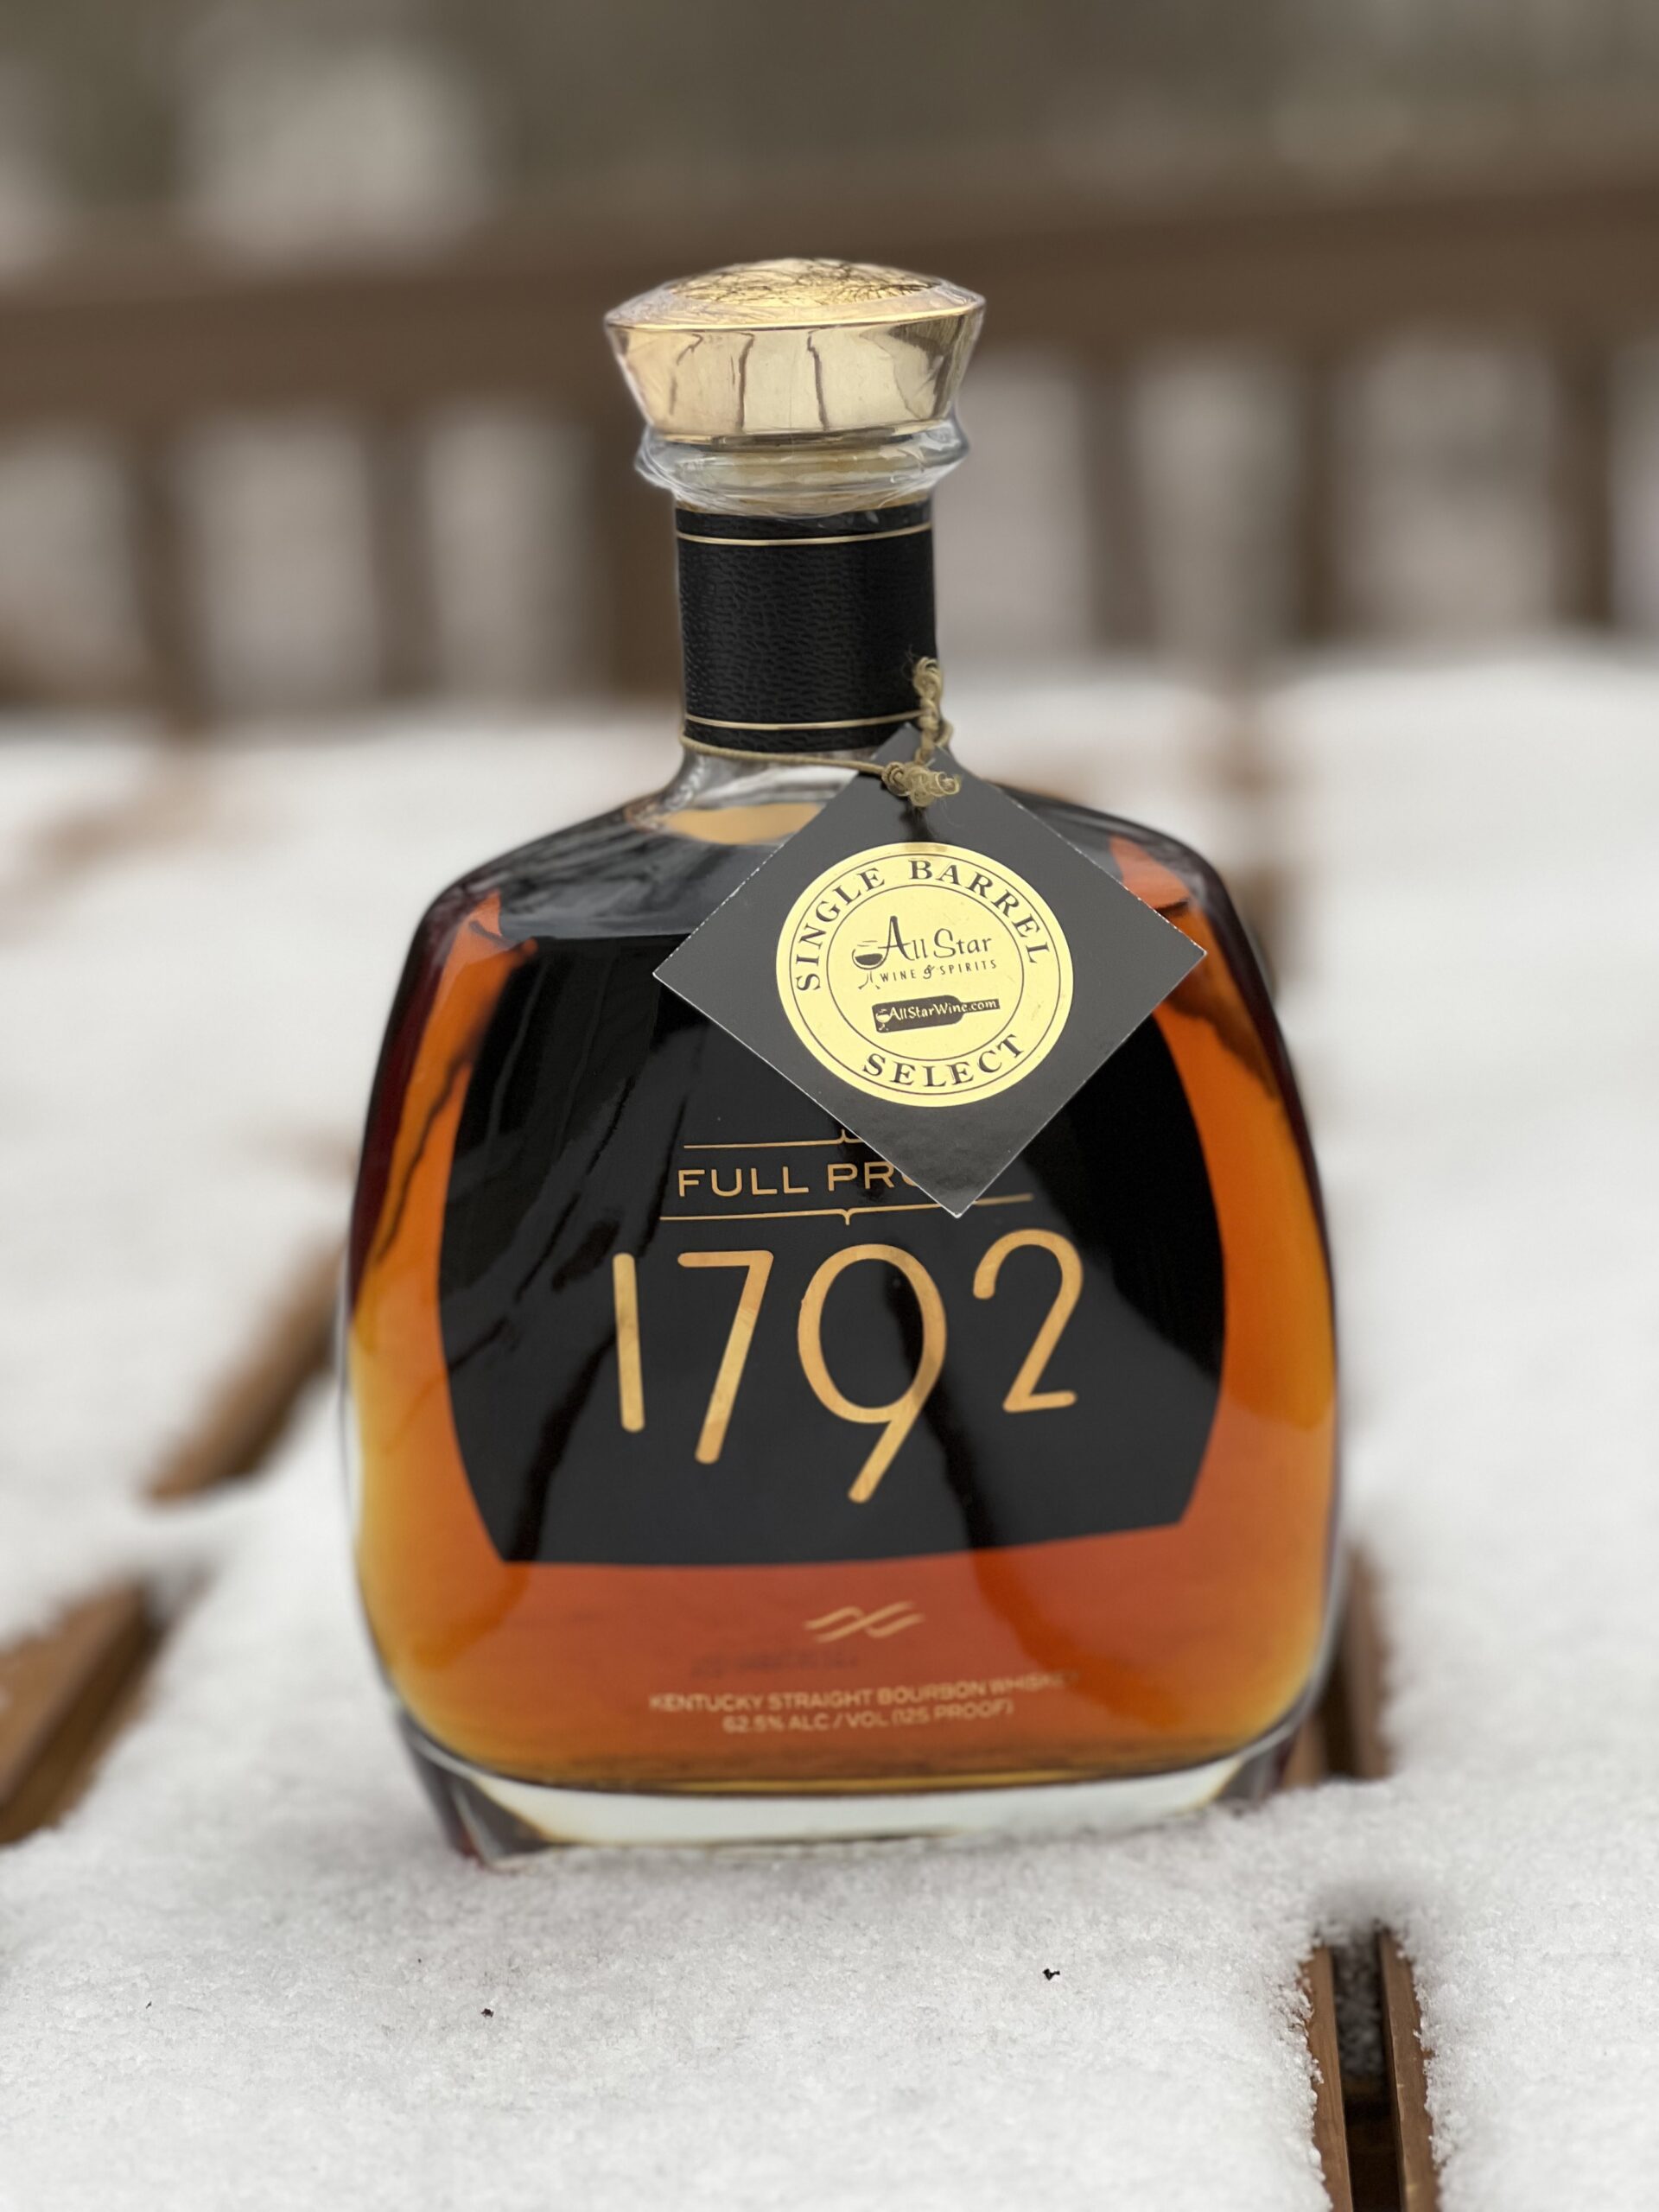 1792 Full Proof – All Star Wine & Spirits Single Barrel Select